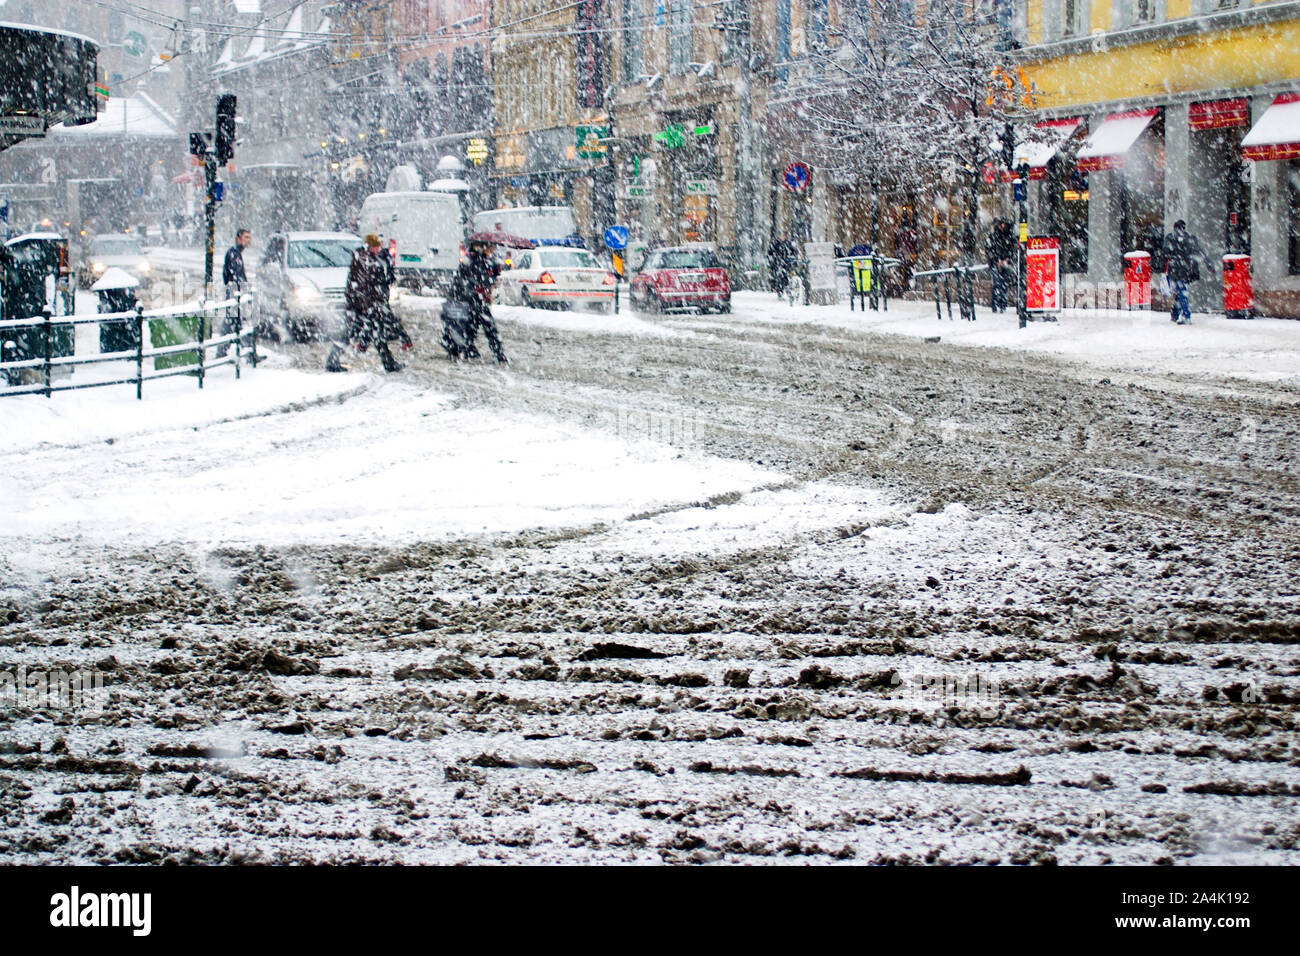 Snowing - bad weather conditions in Oslo, Norway - slushy roads Stock Photo  - Alamy